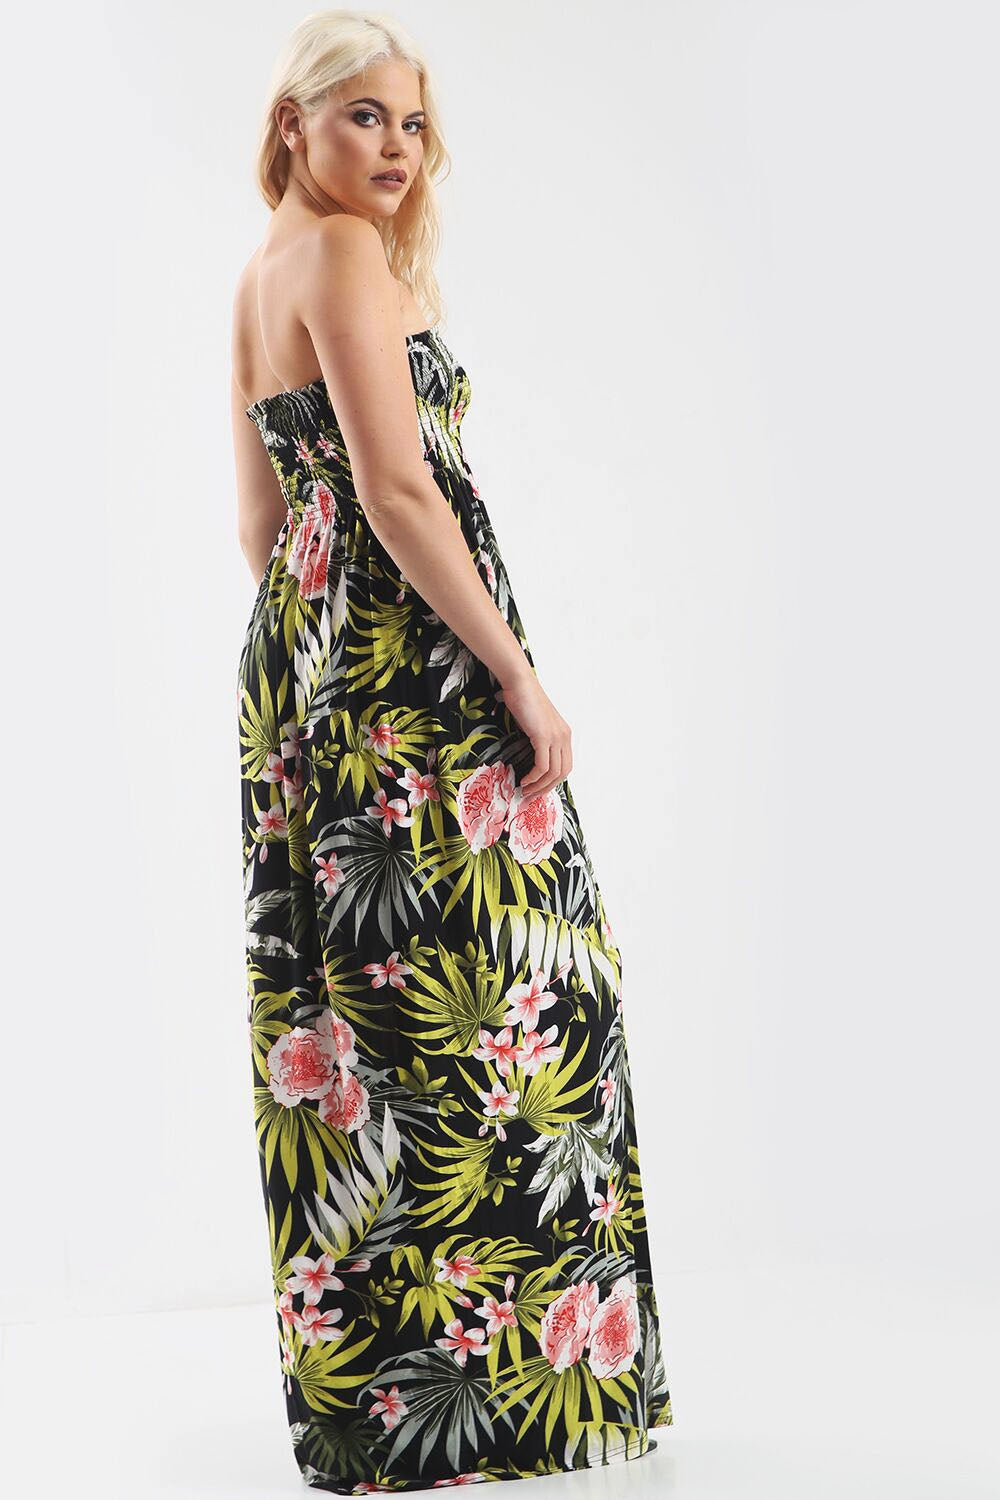 Green Leaf Tropical Print Strapless Maxi Dress - bejealous-com